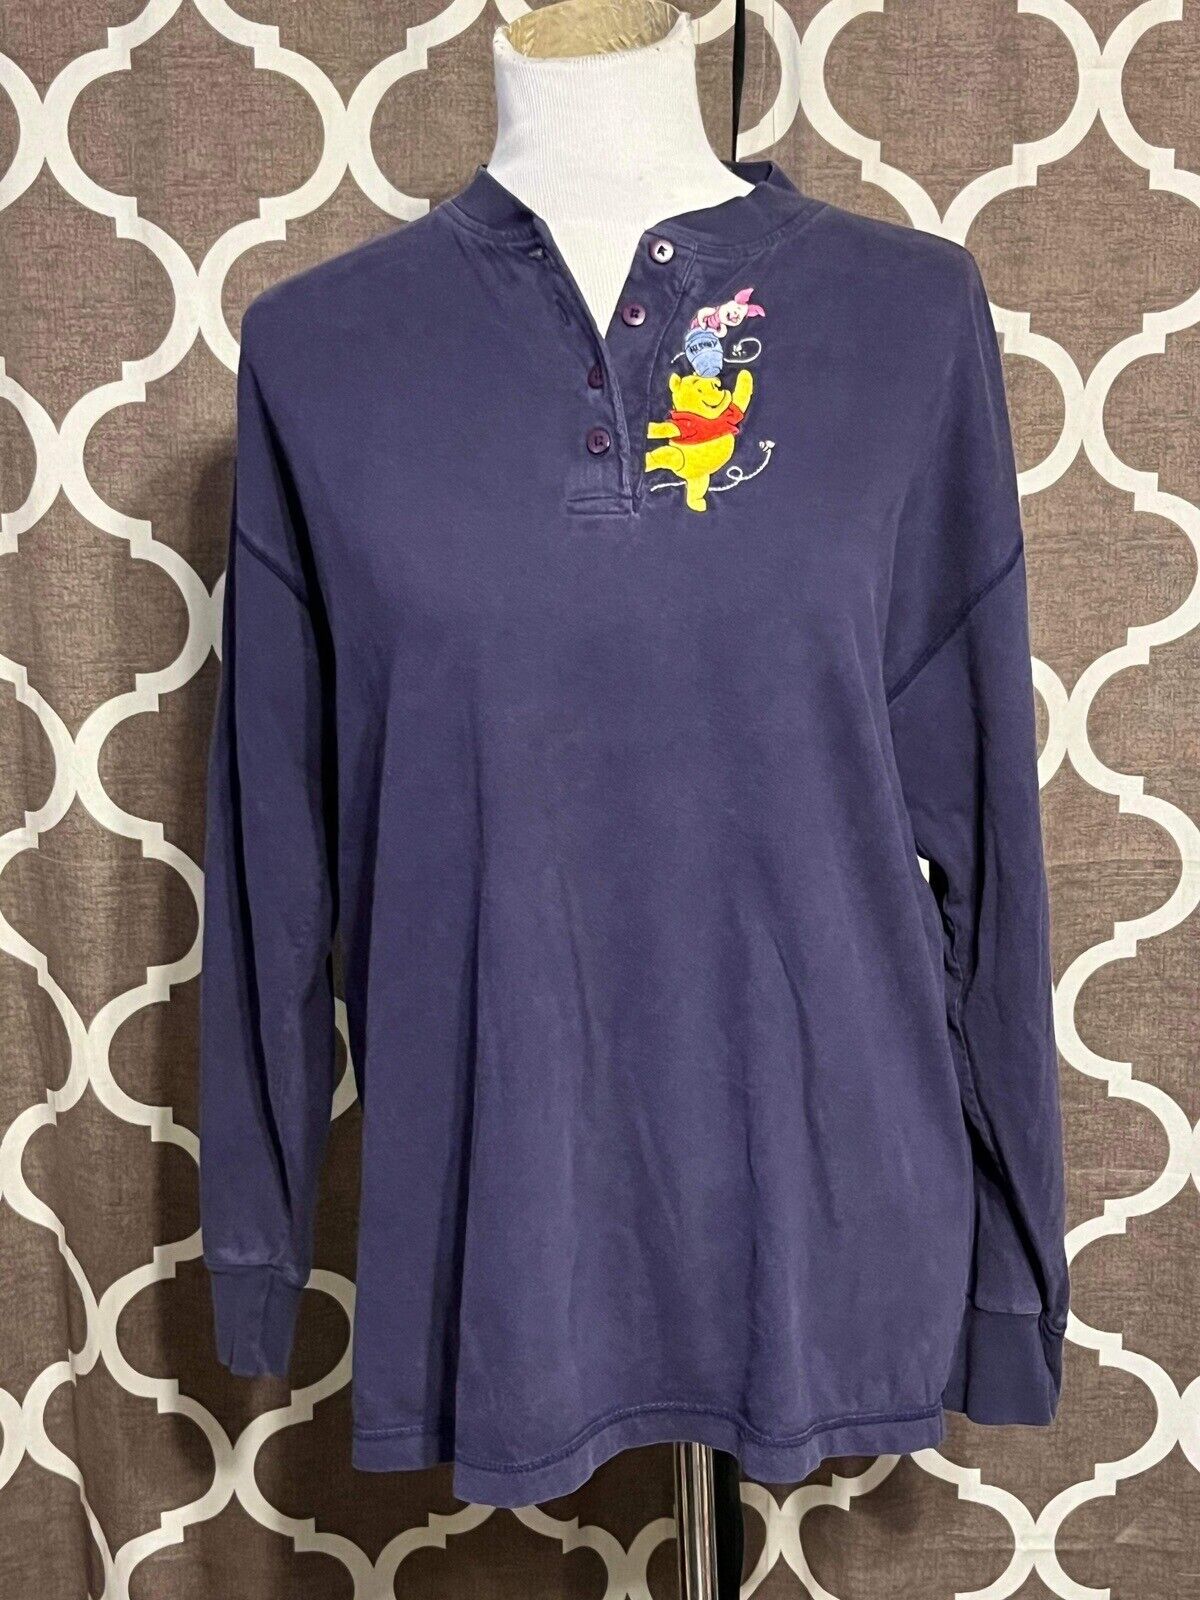 Vintage Disney Henley Shirt Embroidered Pooh Piglet Jerry Leigh Adult Medium